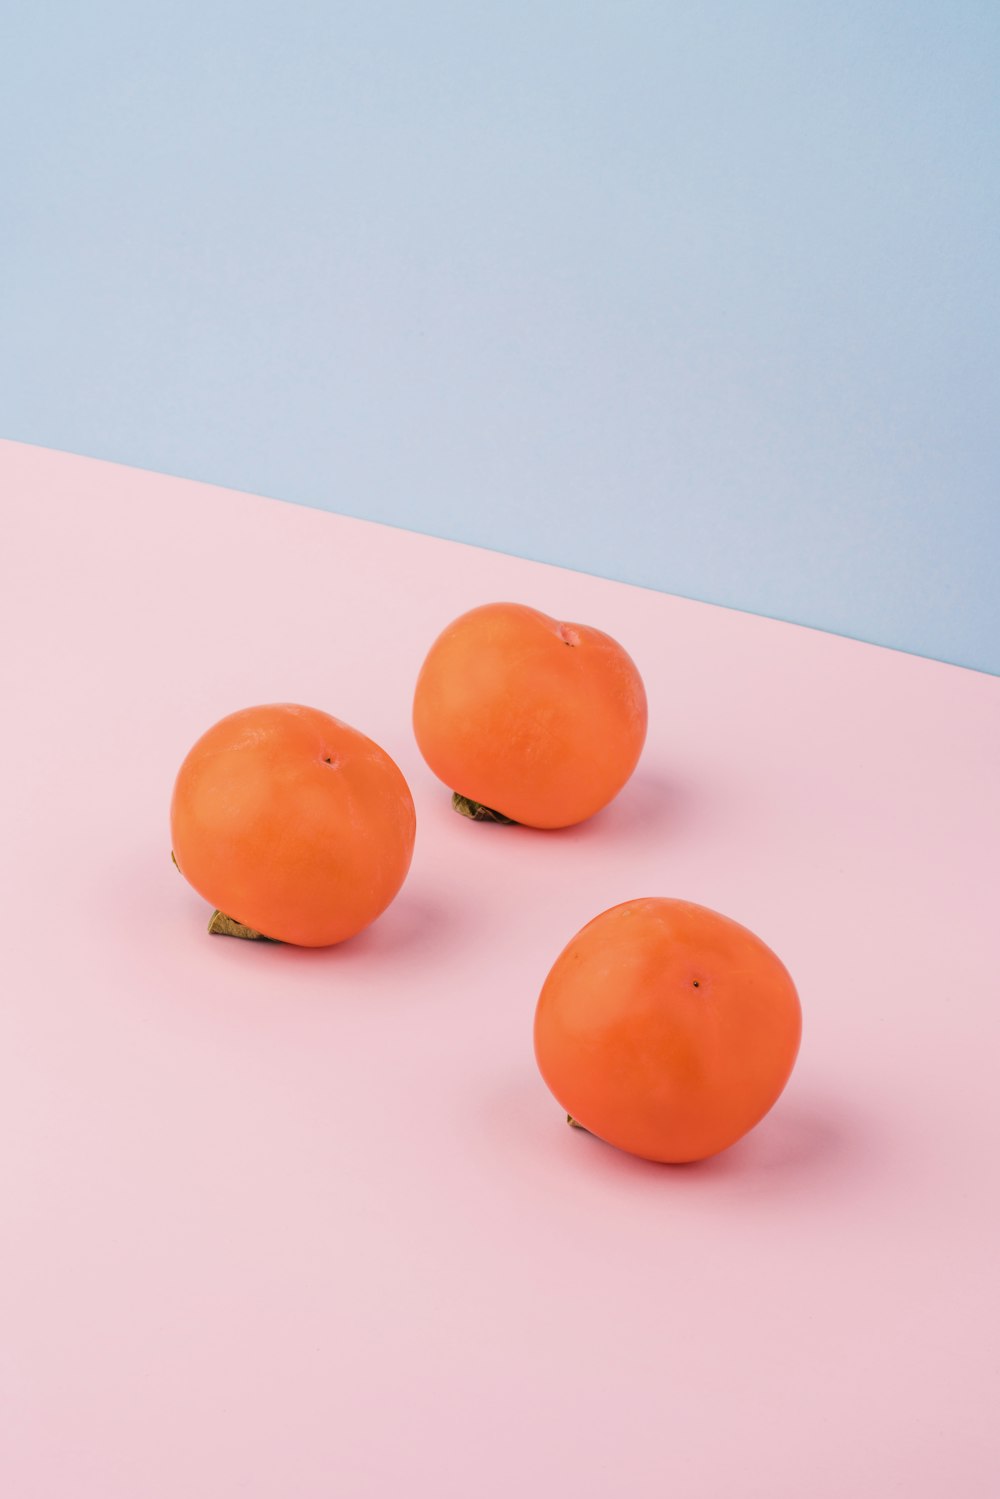 three orange fruits on pink surface